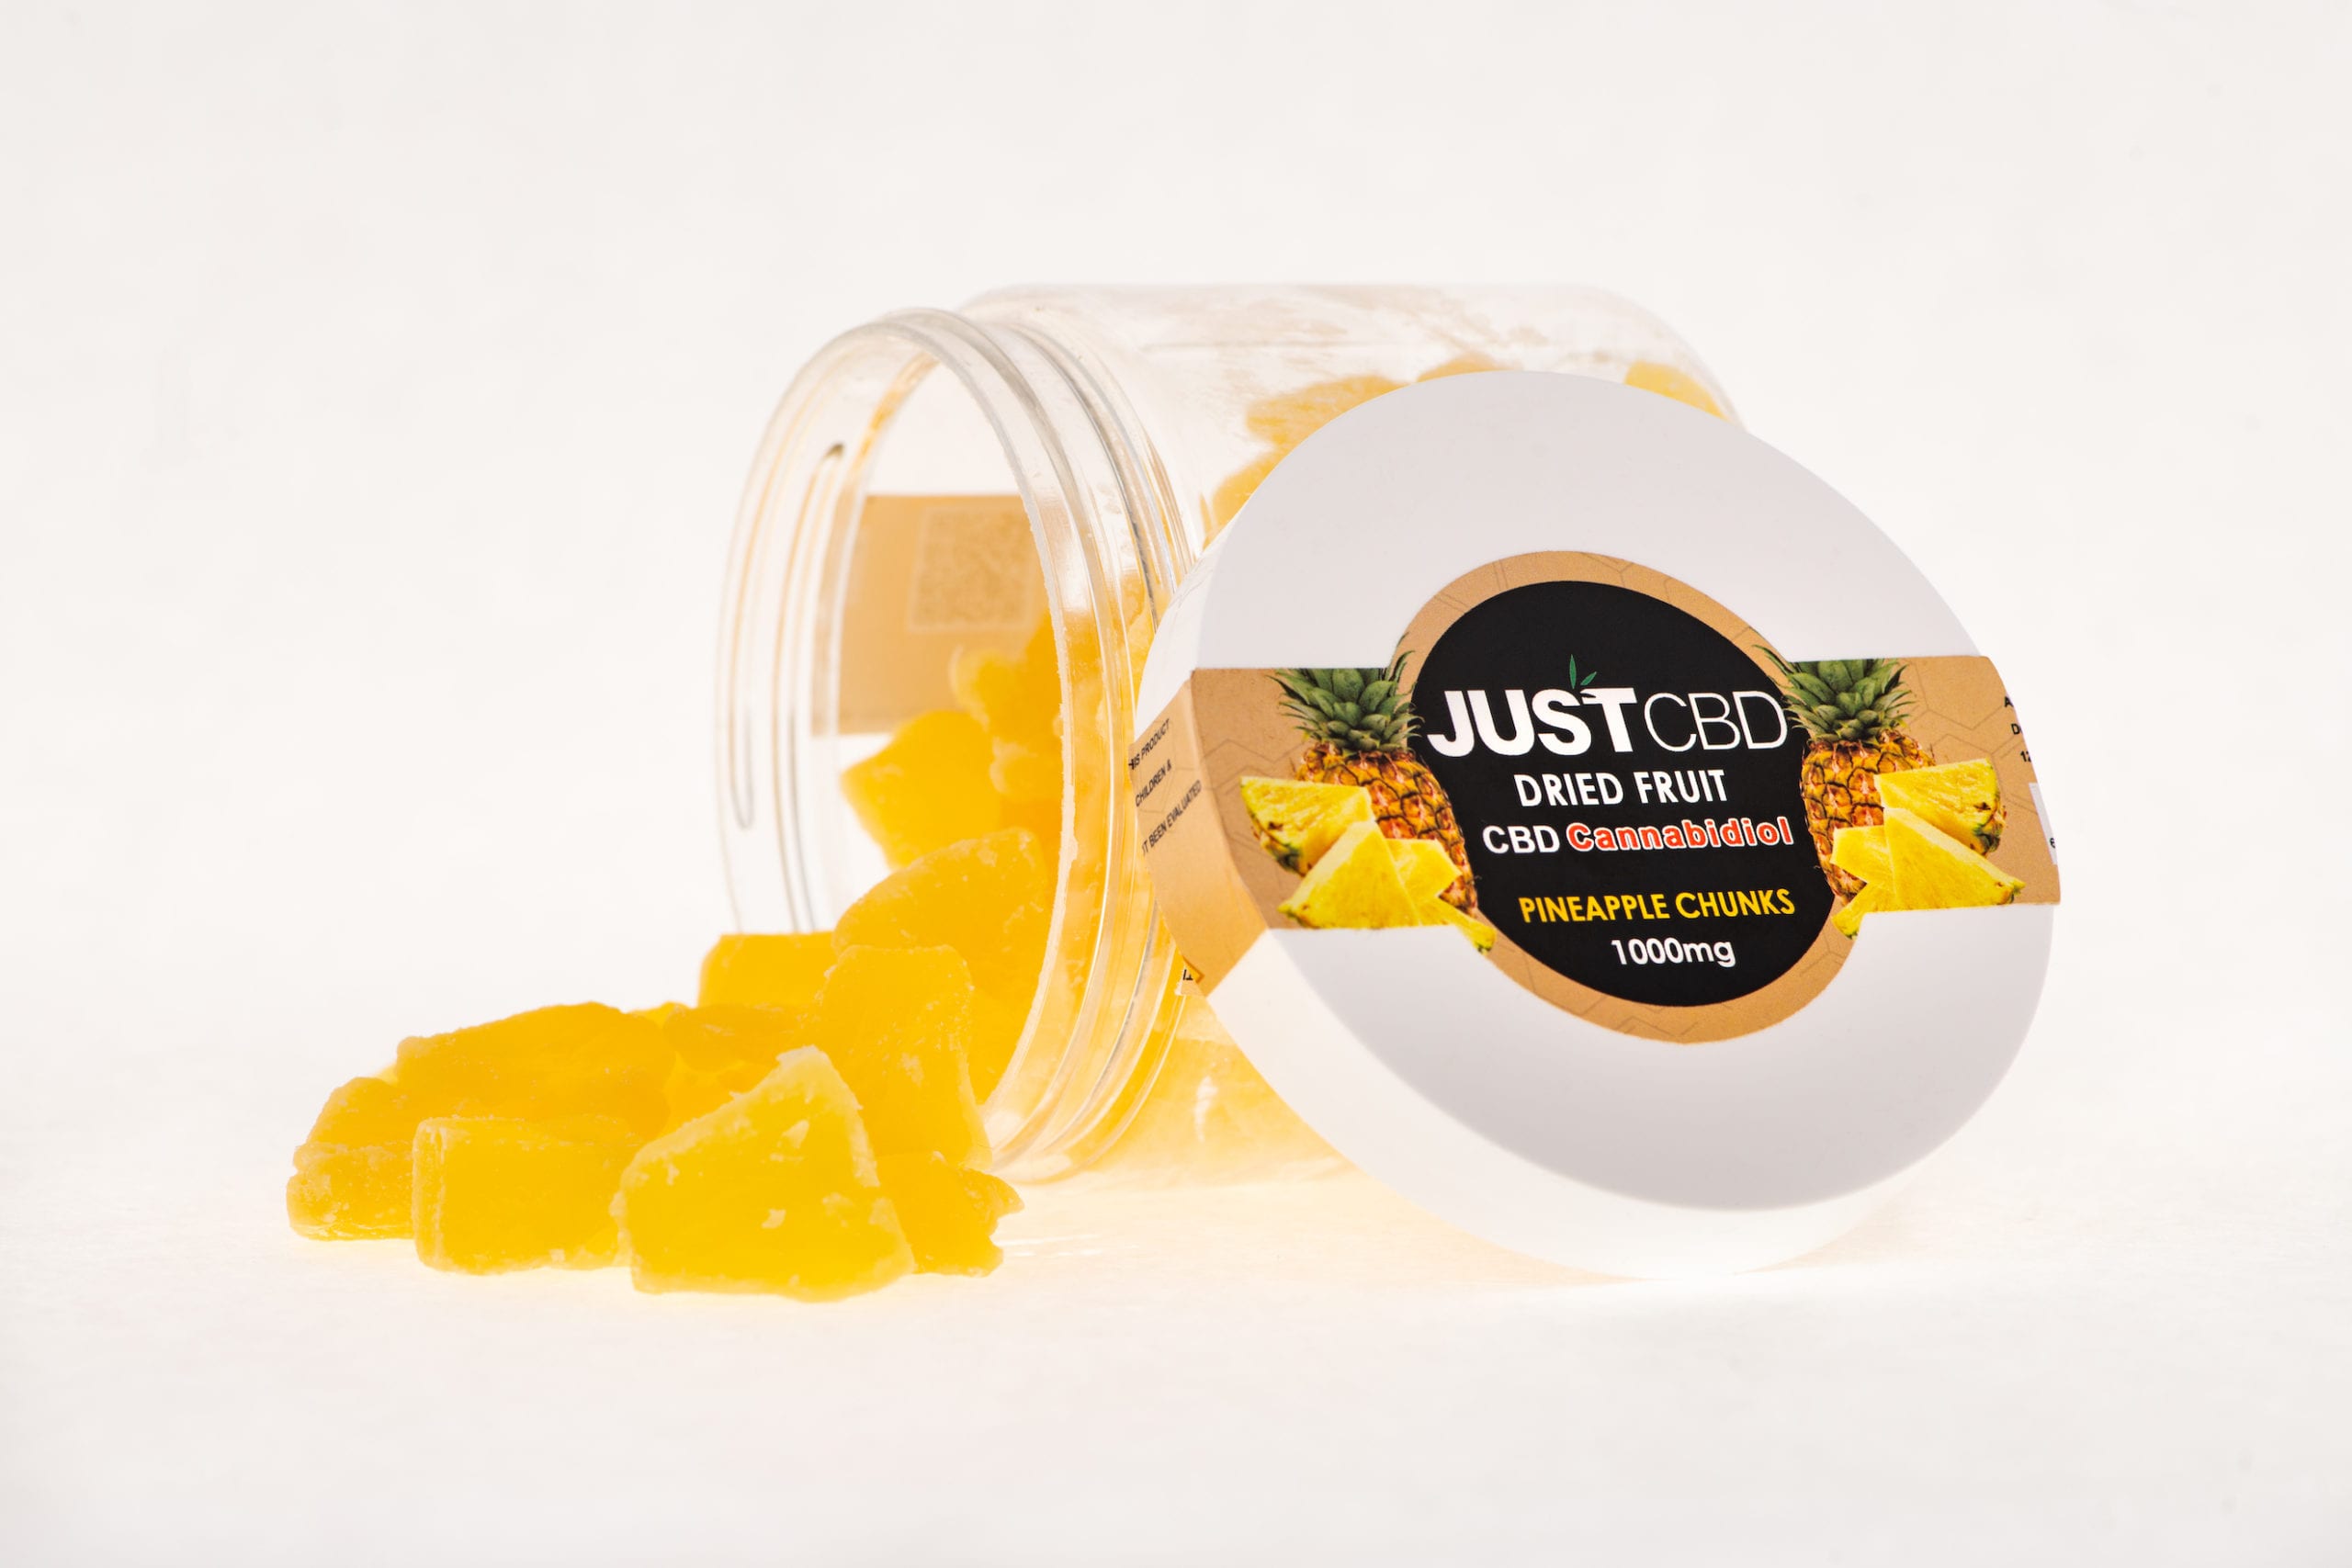 IU C&I Studios Portfolio JustCBD Product Photography and JustCBD Products Pineapple chunks on display